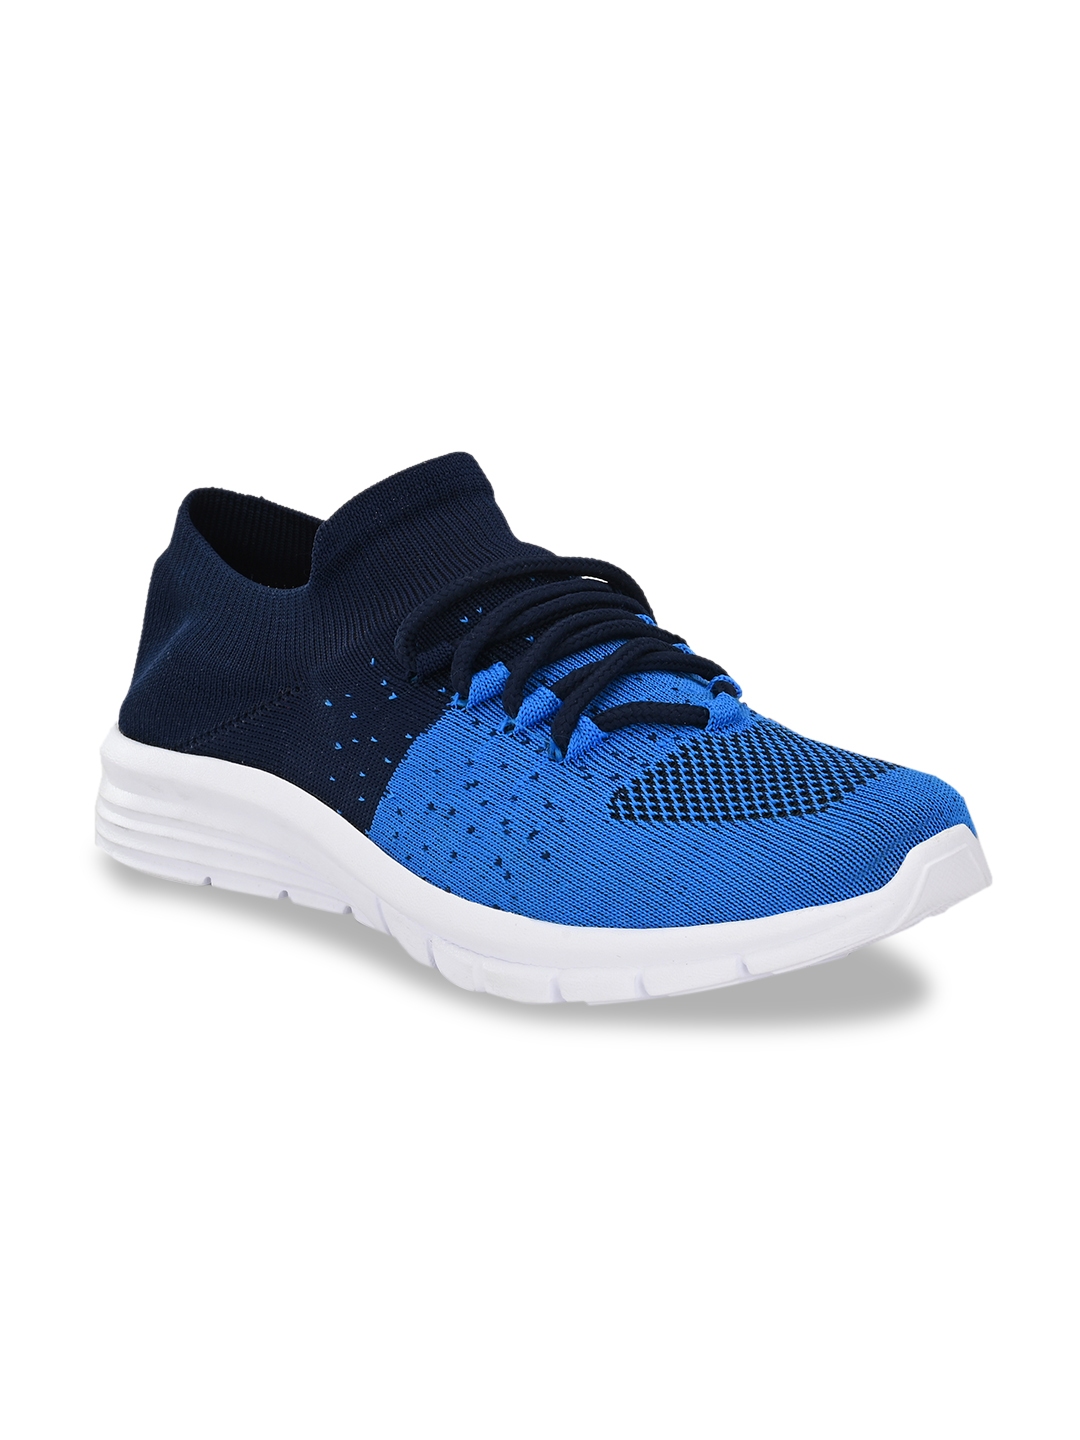 Buy Trendigo Airy Series Men Navy Blue Mesh Walking Shoes - Sports ...